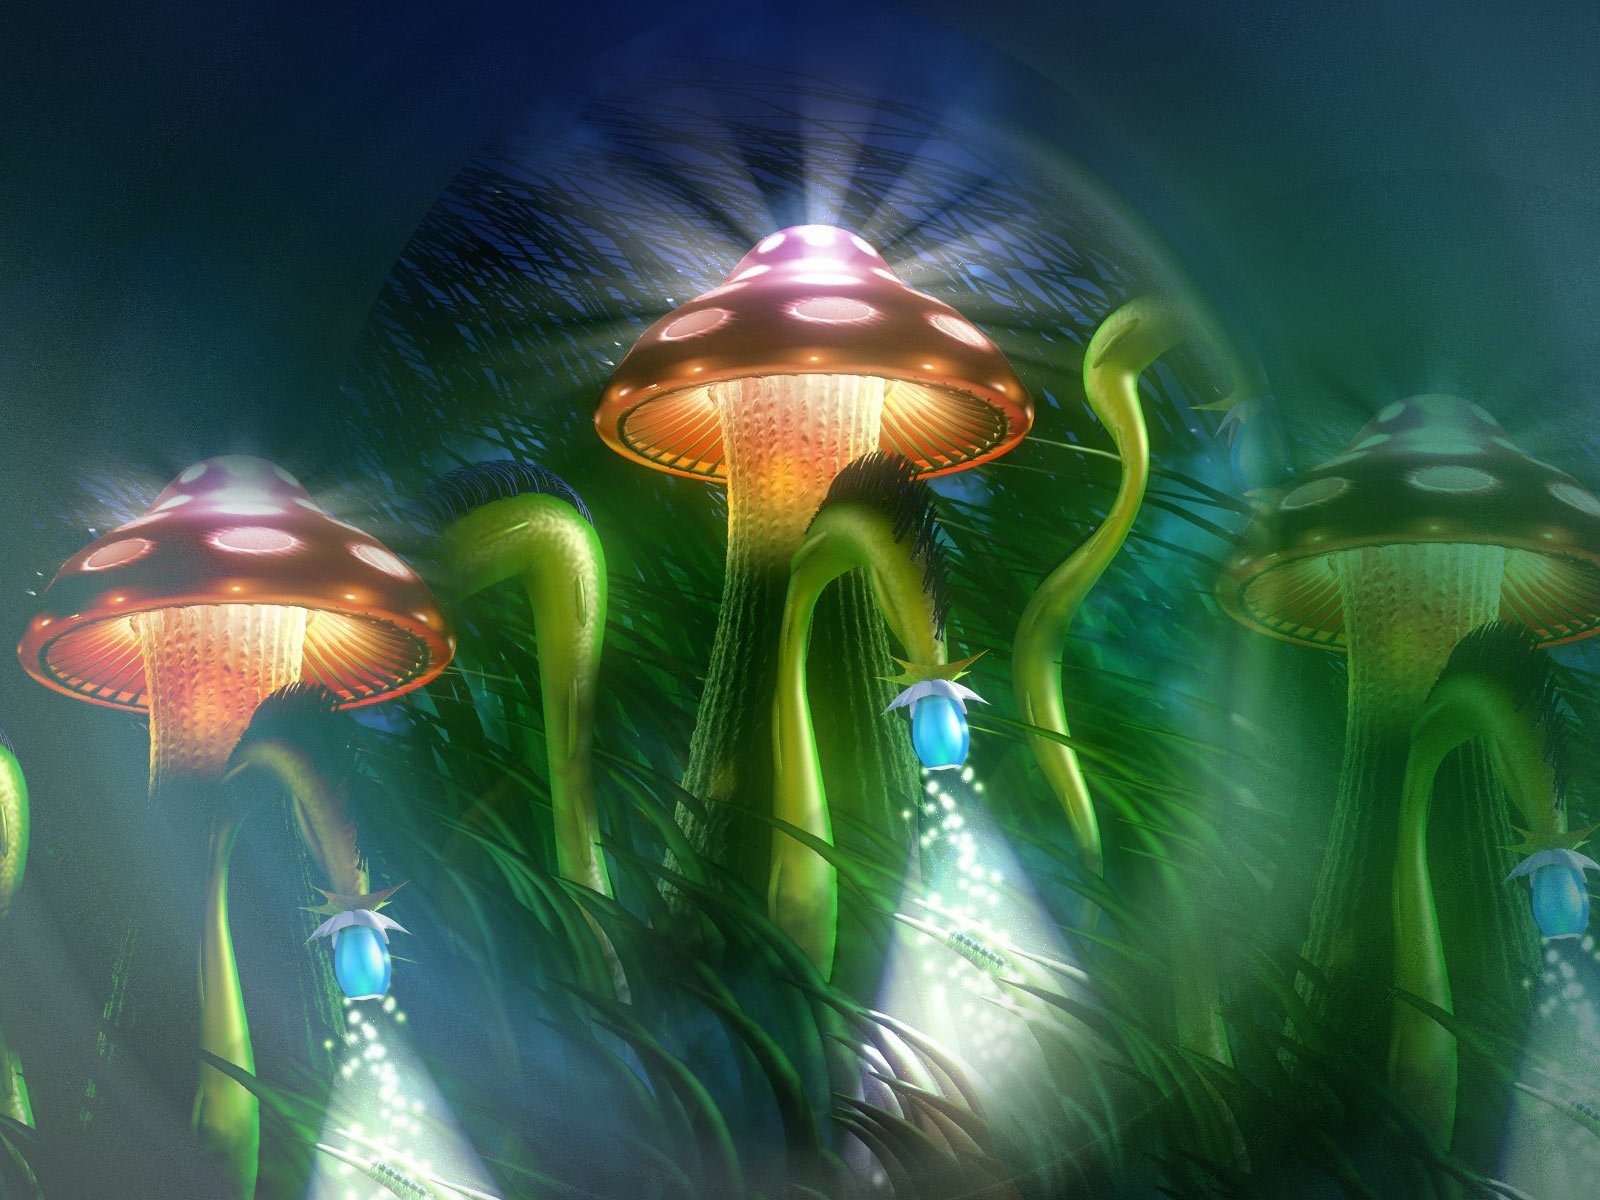 mushroom Wallpaper and Background Image | 1600x1200 | ID:445354